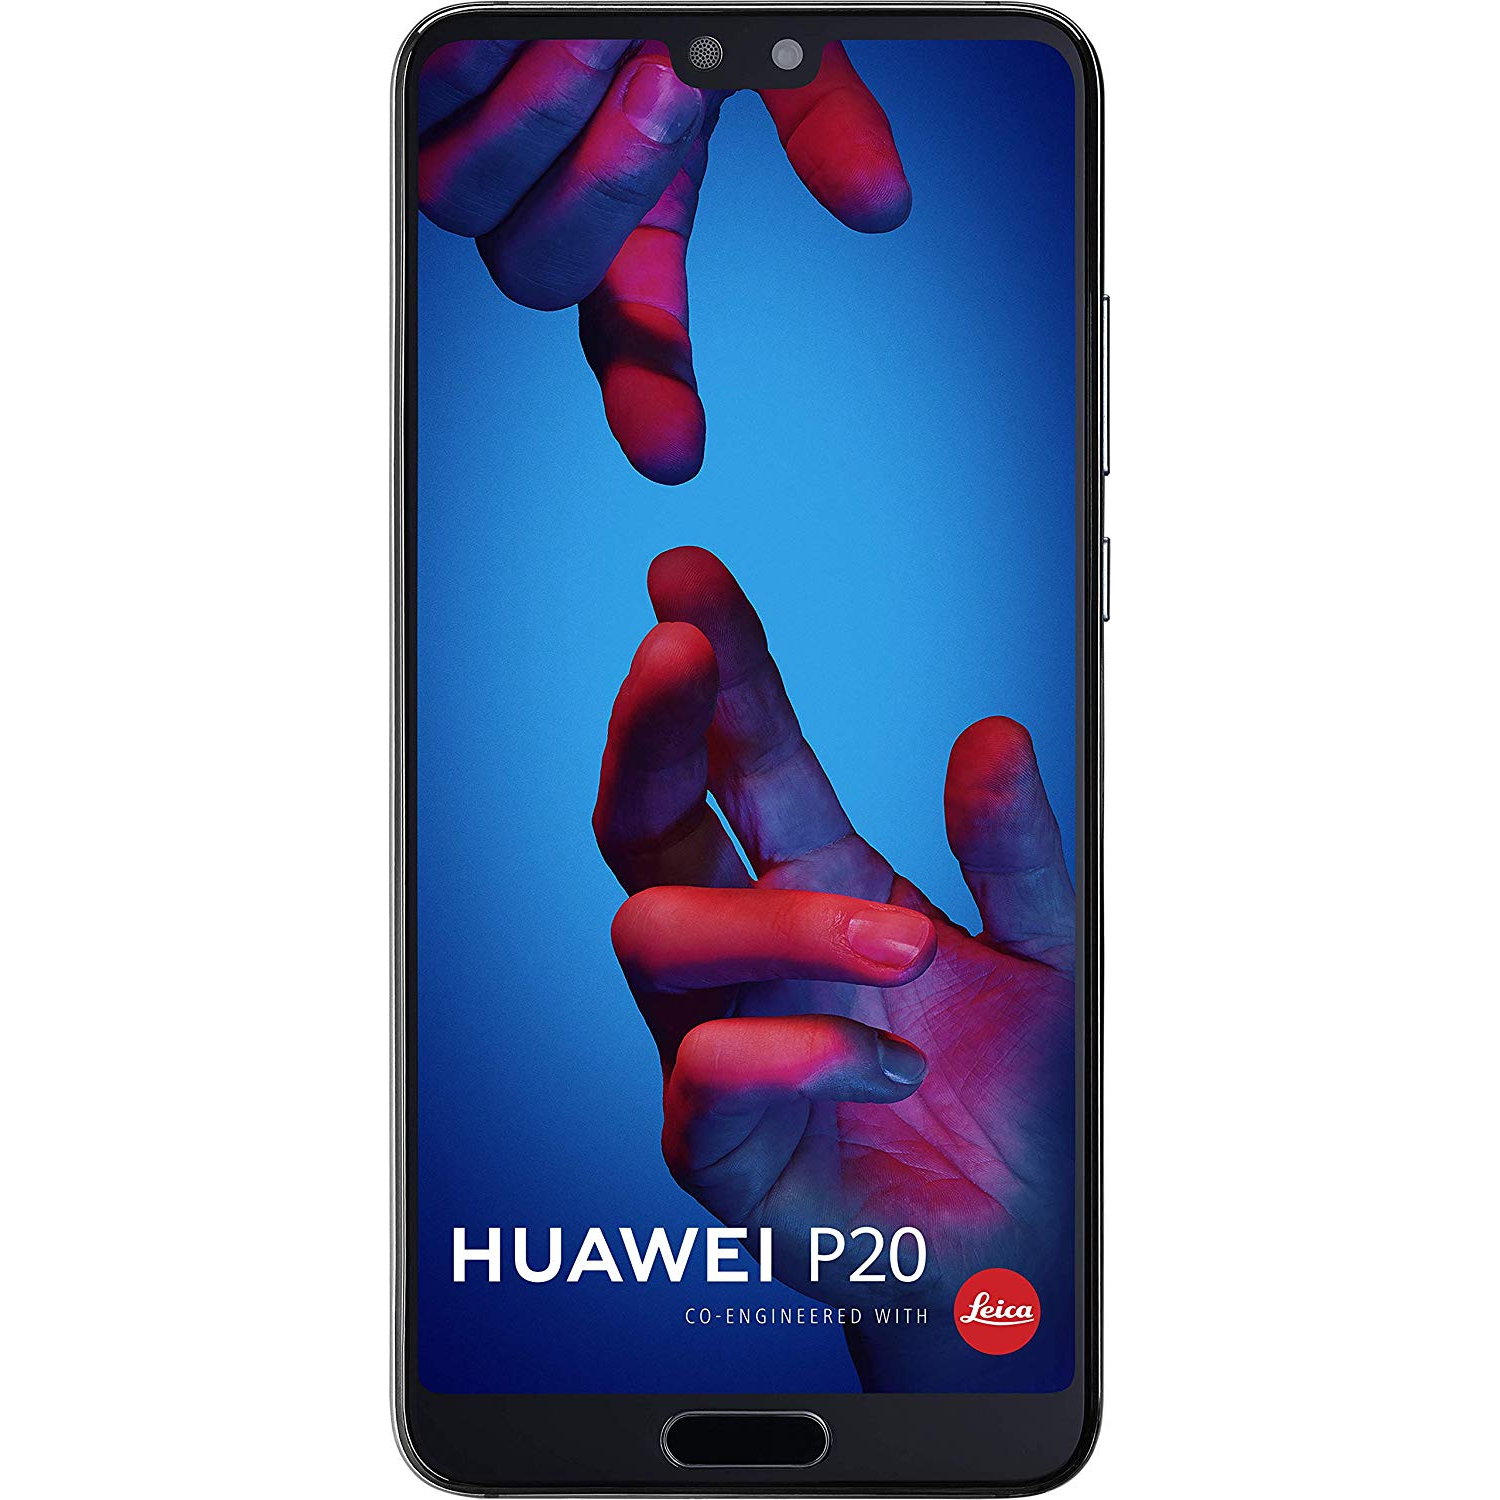 HUAWEI P20 - Unlocked Phone - (Black) - Open Box - Canadian Version